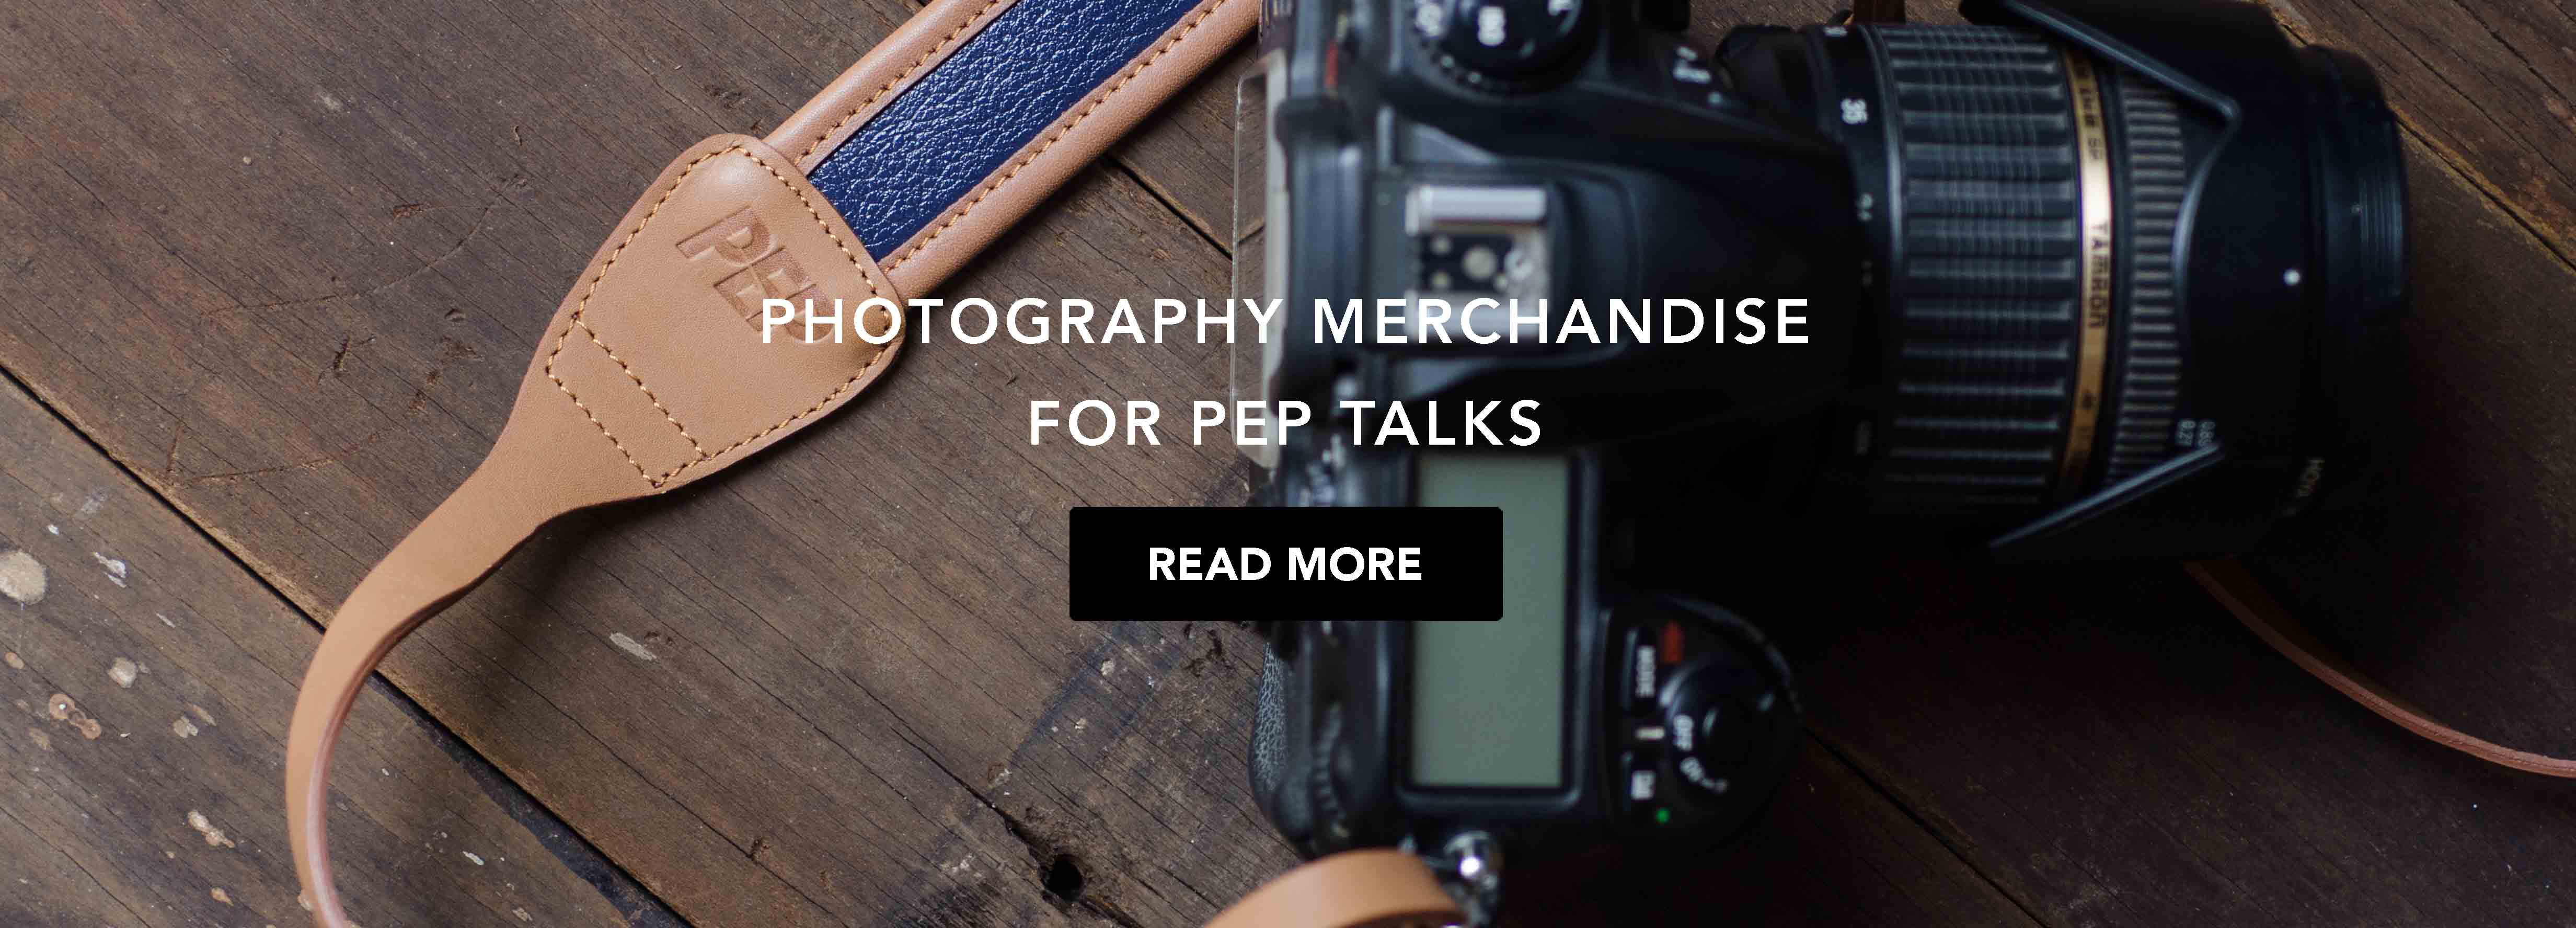 leather-photography-merchadise-for-pep-talks